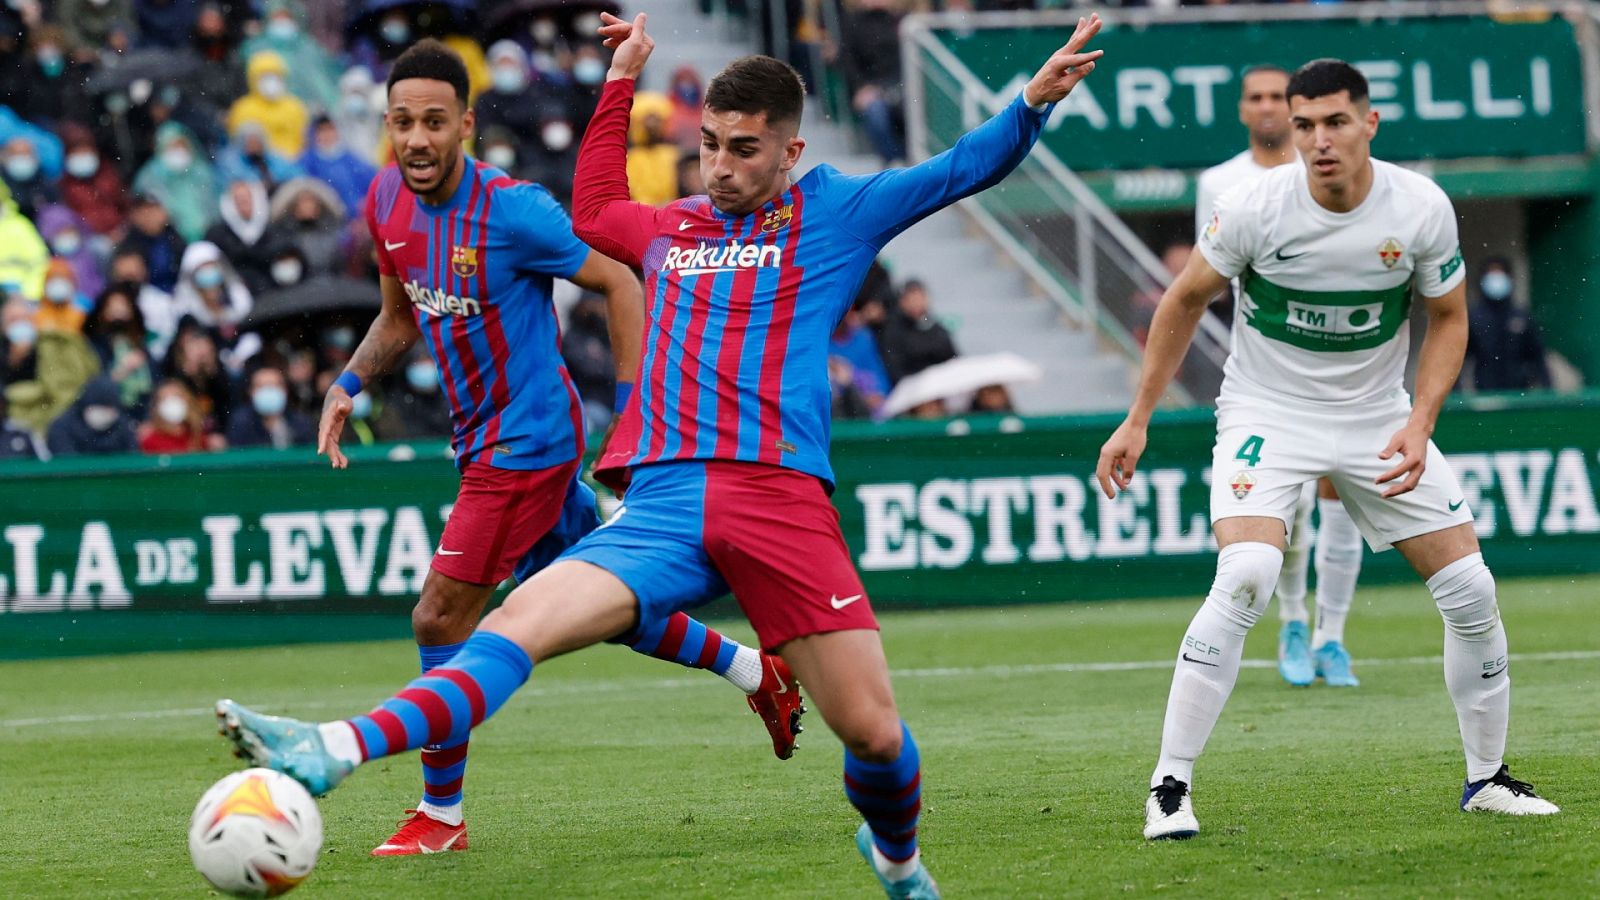 El barcelonista Ferran Torres marca gol contra el Elche en el Martínez Valero.del jugador del Barcelona Ousmane Dembelé.